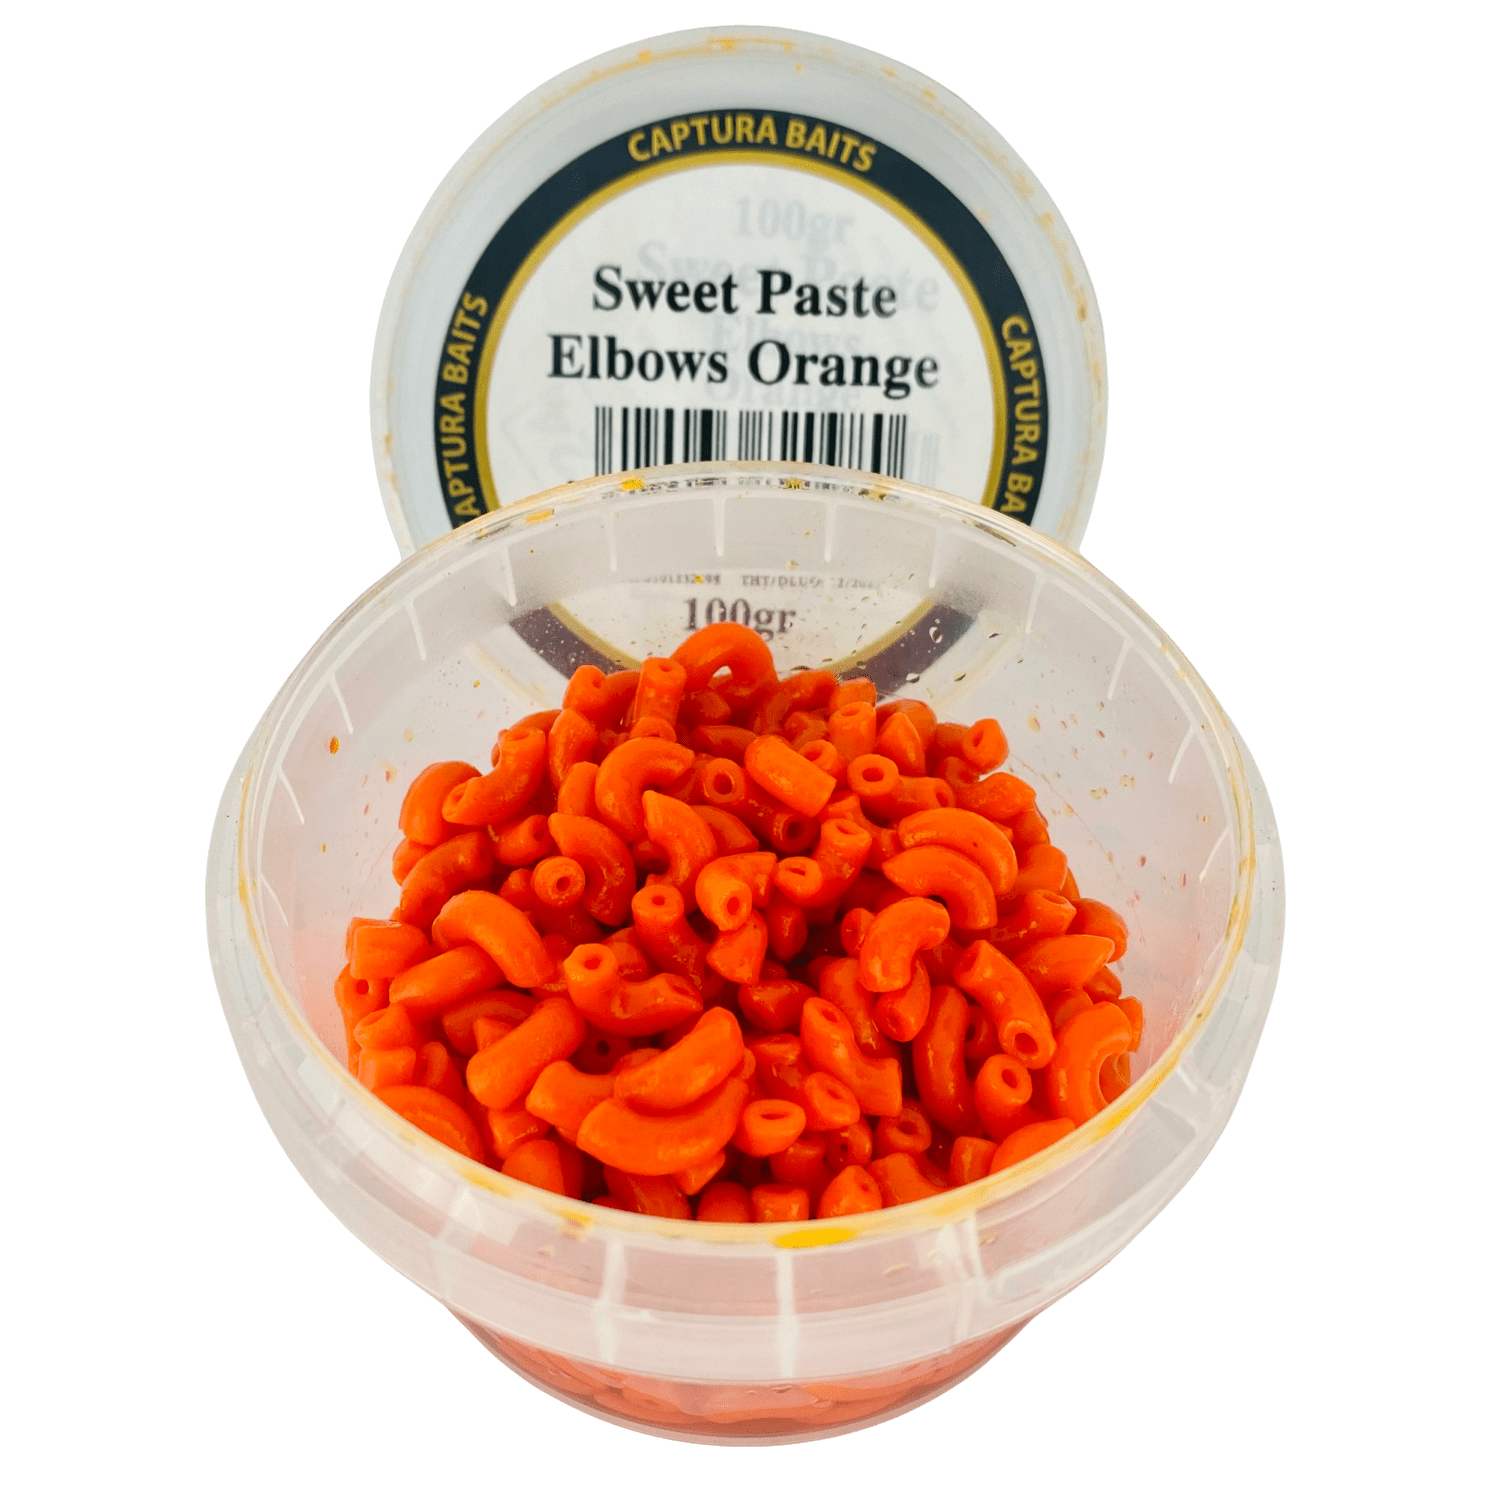 captura baits sweet paste elbows macaroni pasta orange oranje